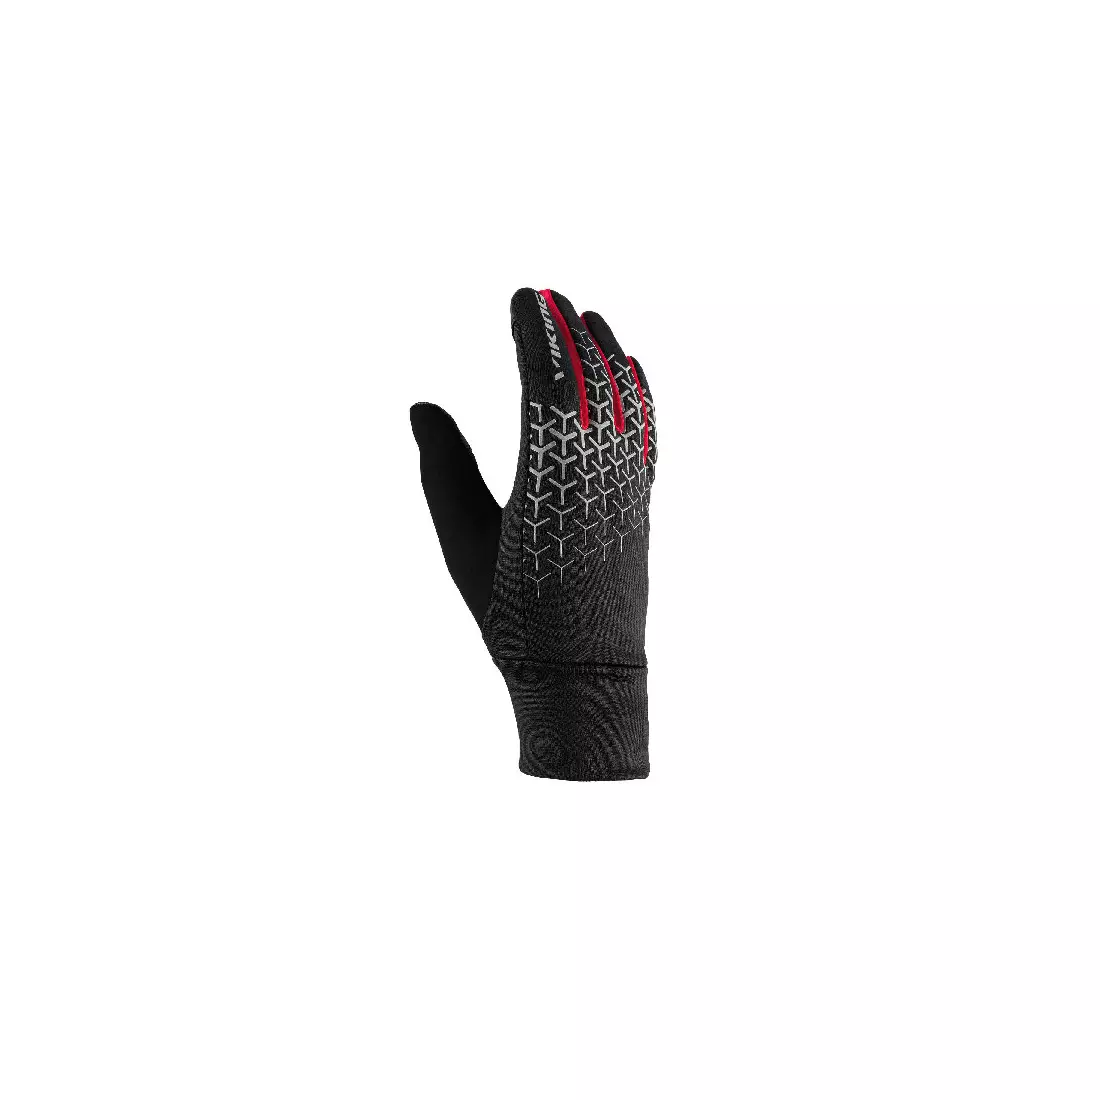 VIKING zimné rukavice ORTON MULTIFUNCTION black/red 140/20/3300/34